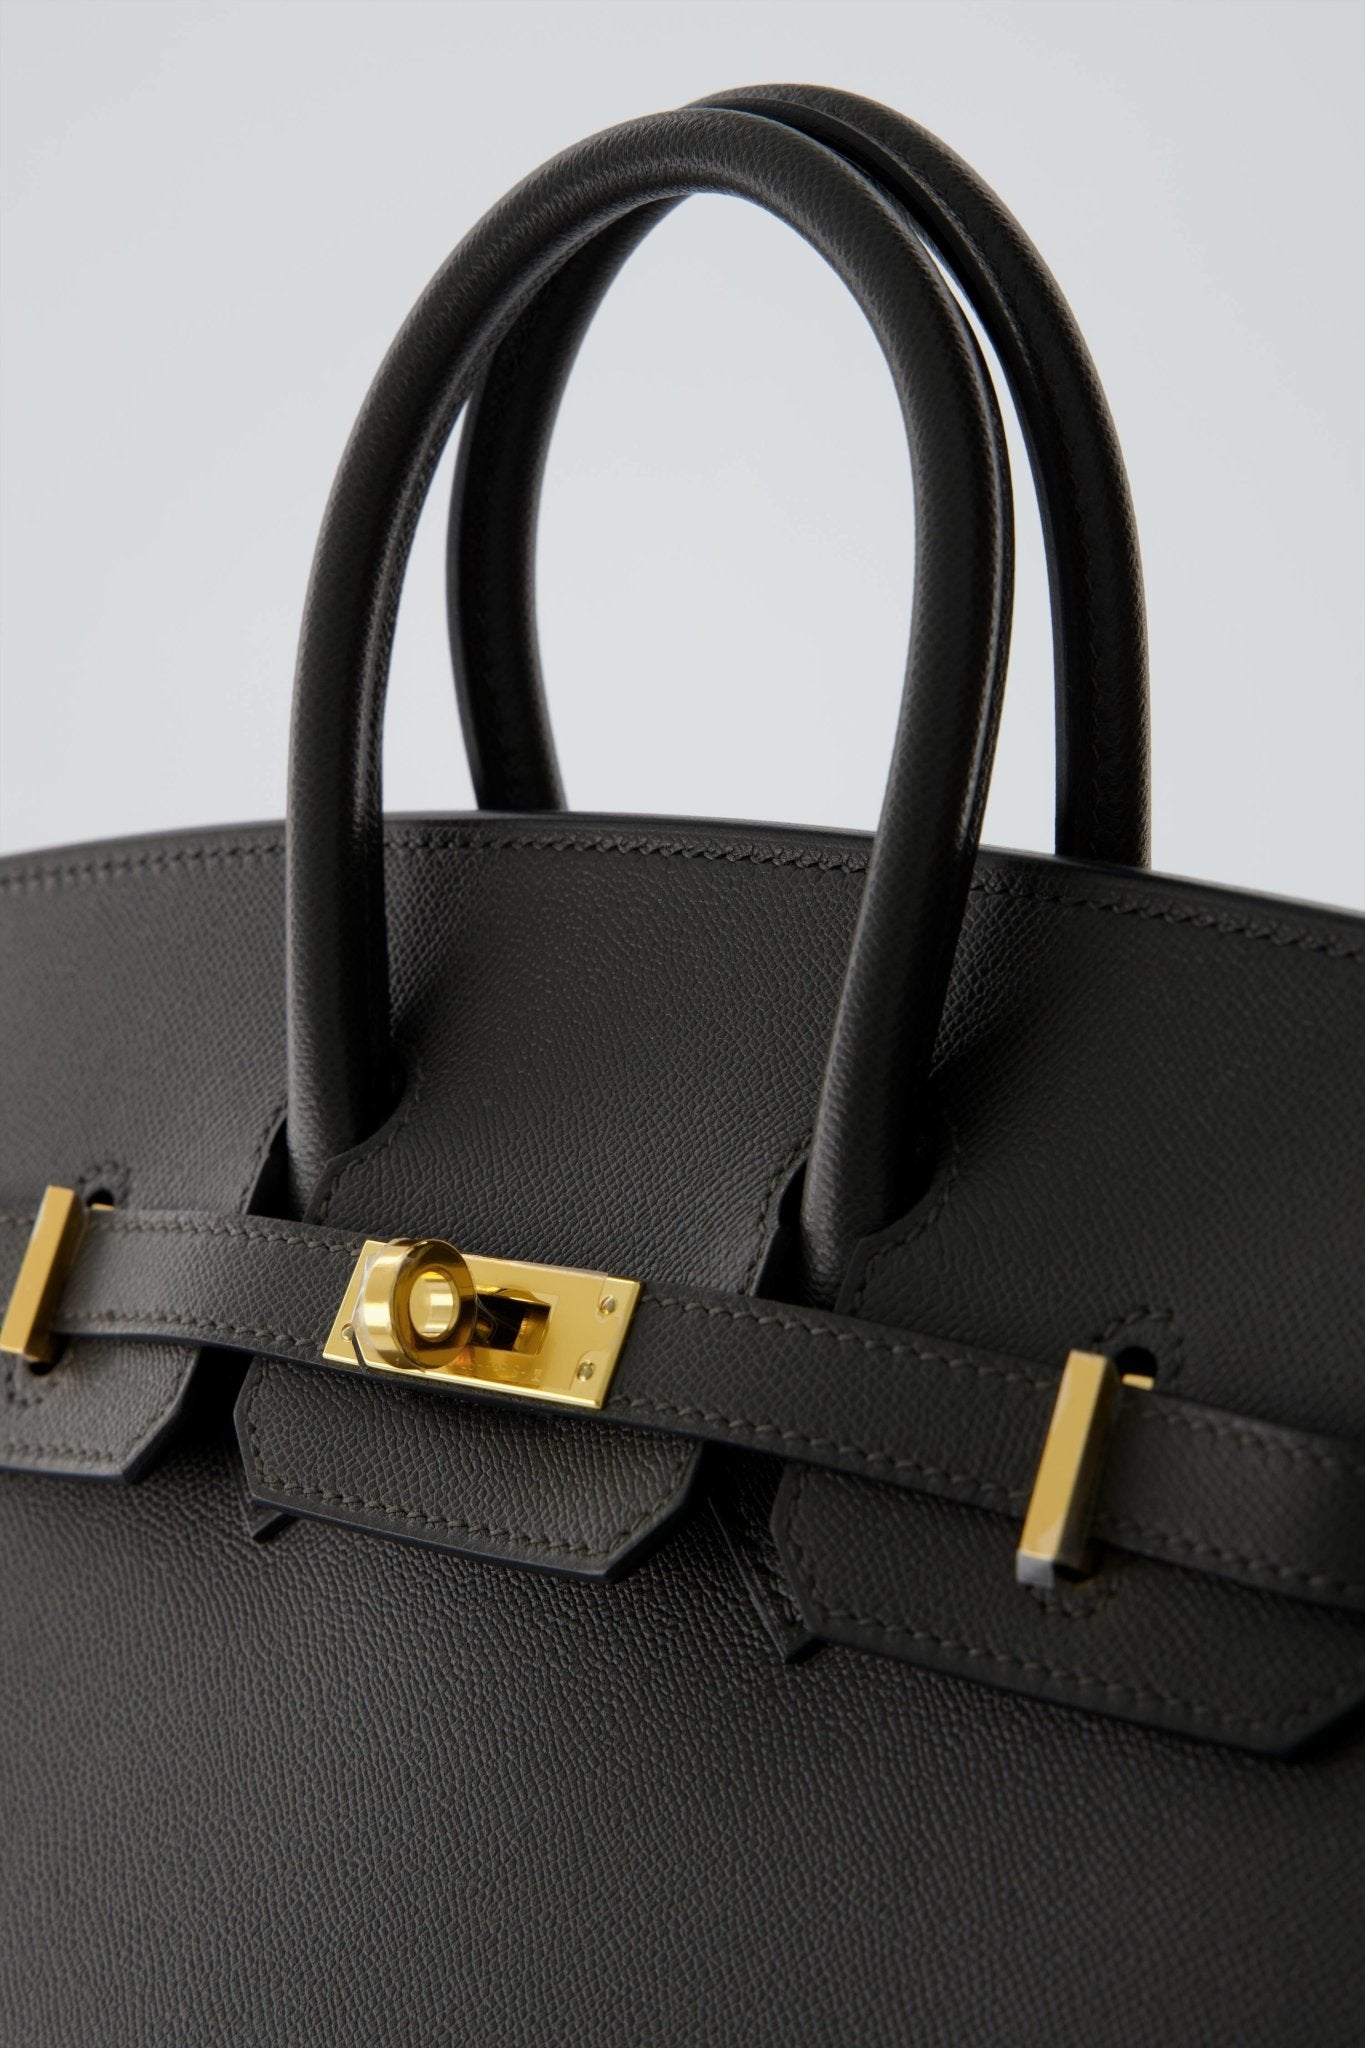 Hermes Birkin 25 Sellier Handbag Graphite